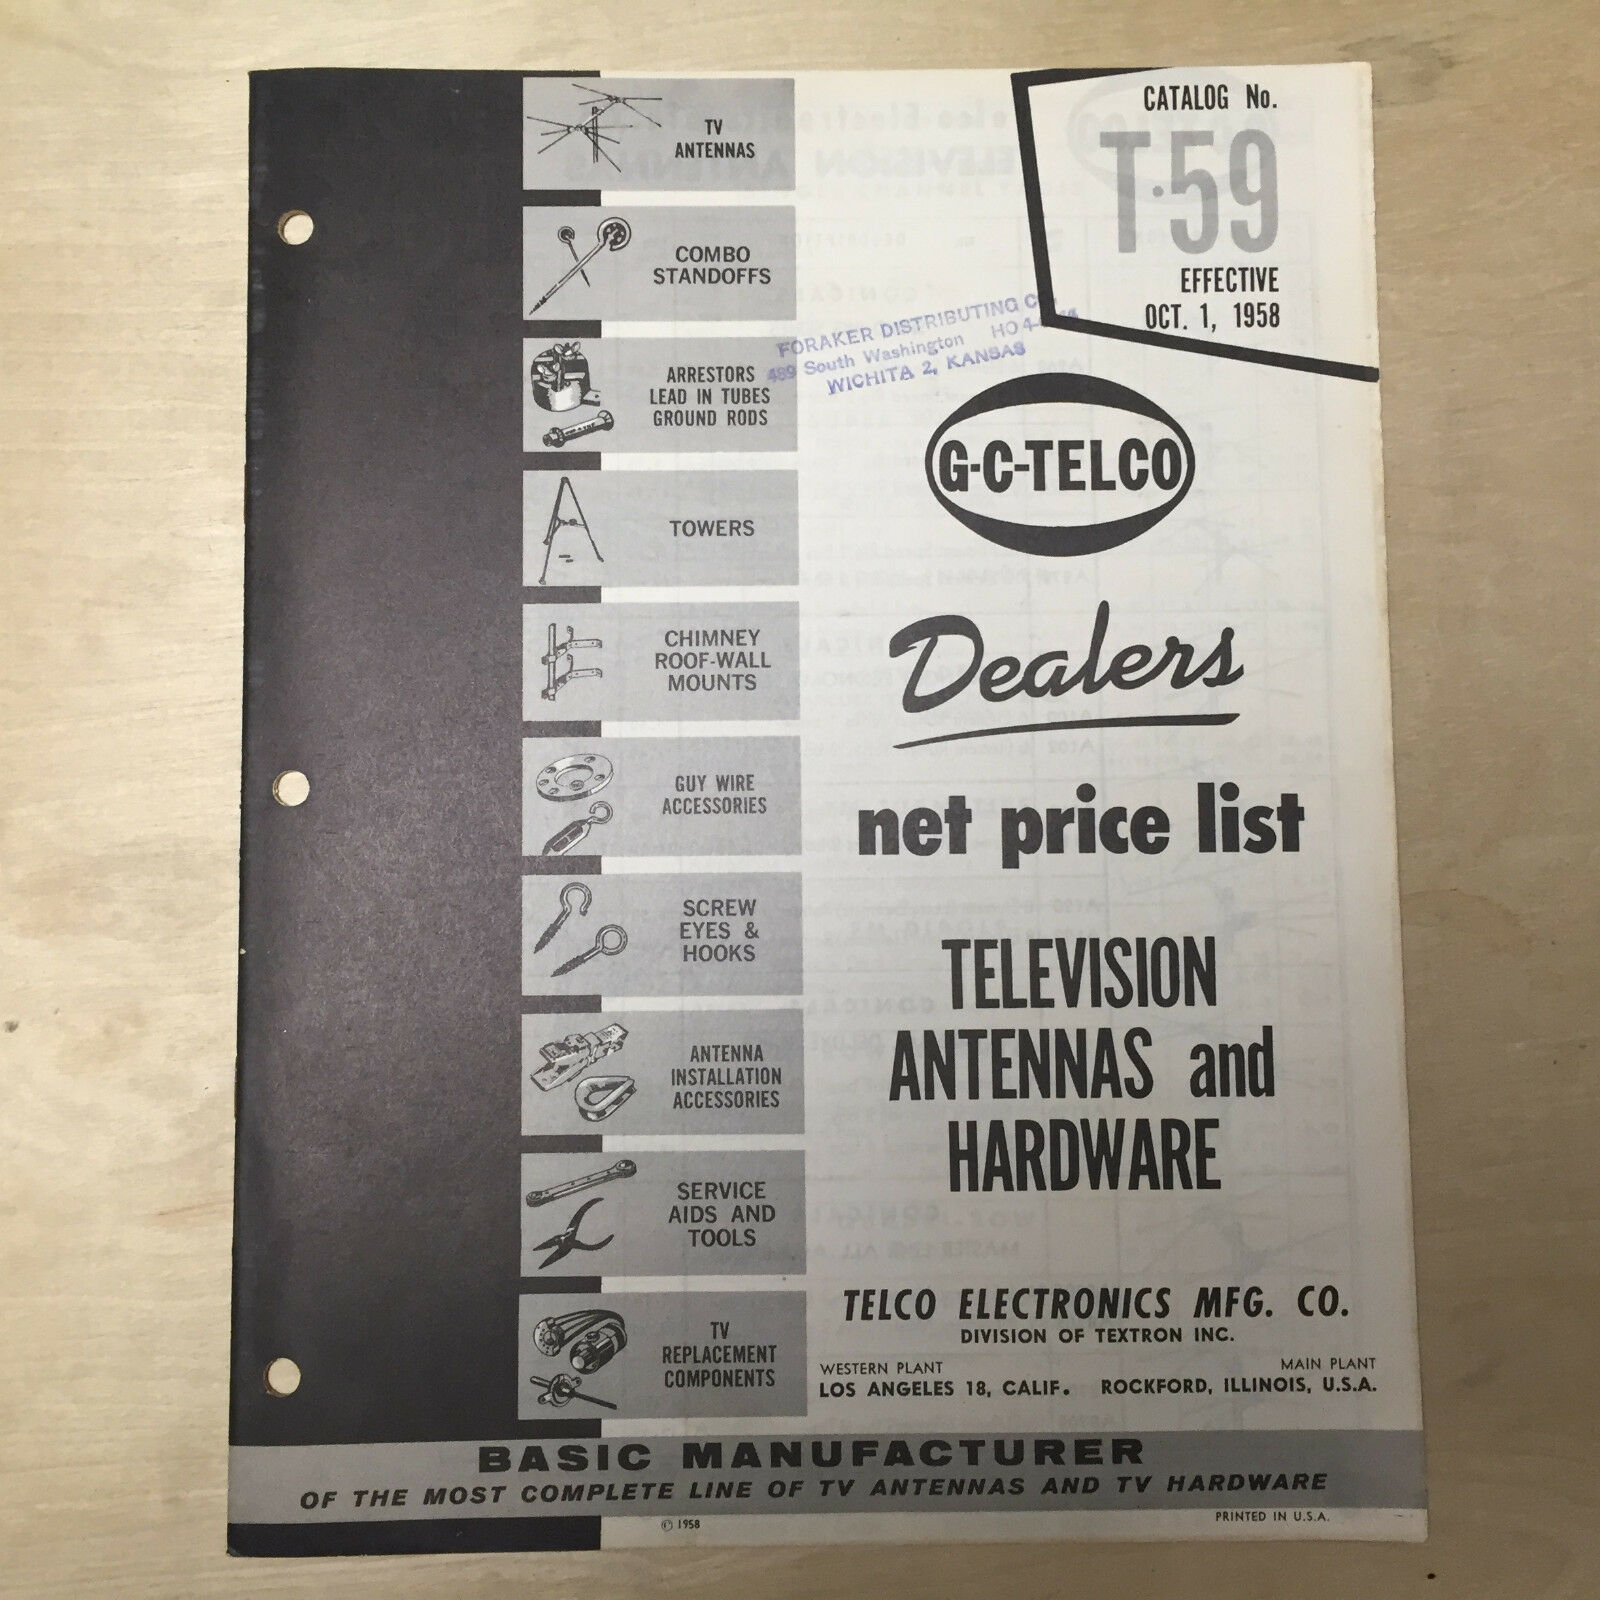 Vtg Telco Electronics Mfg Co Catalog ~ G-c-telco Tv Antennas & Hardware 1958